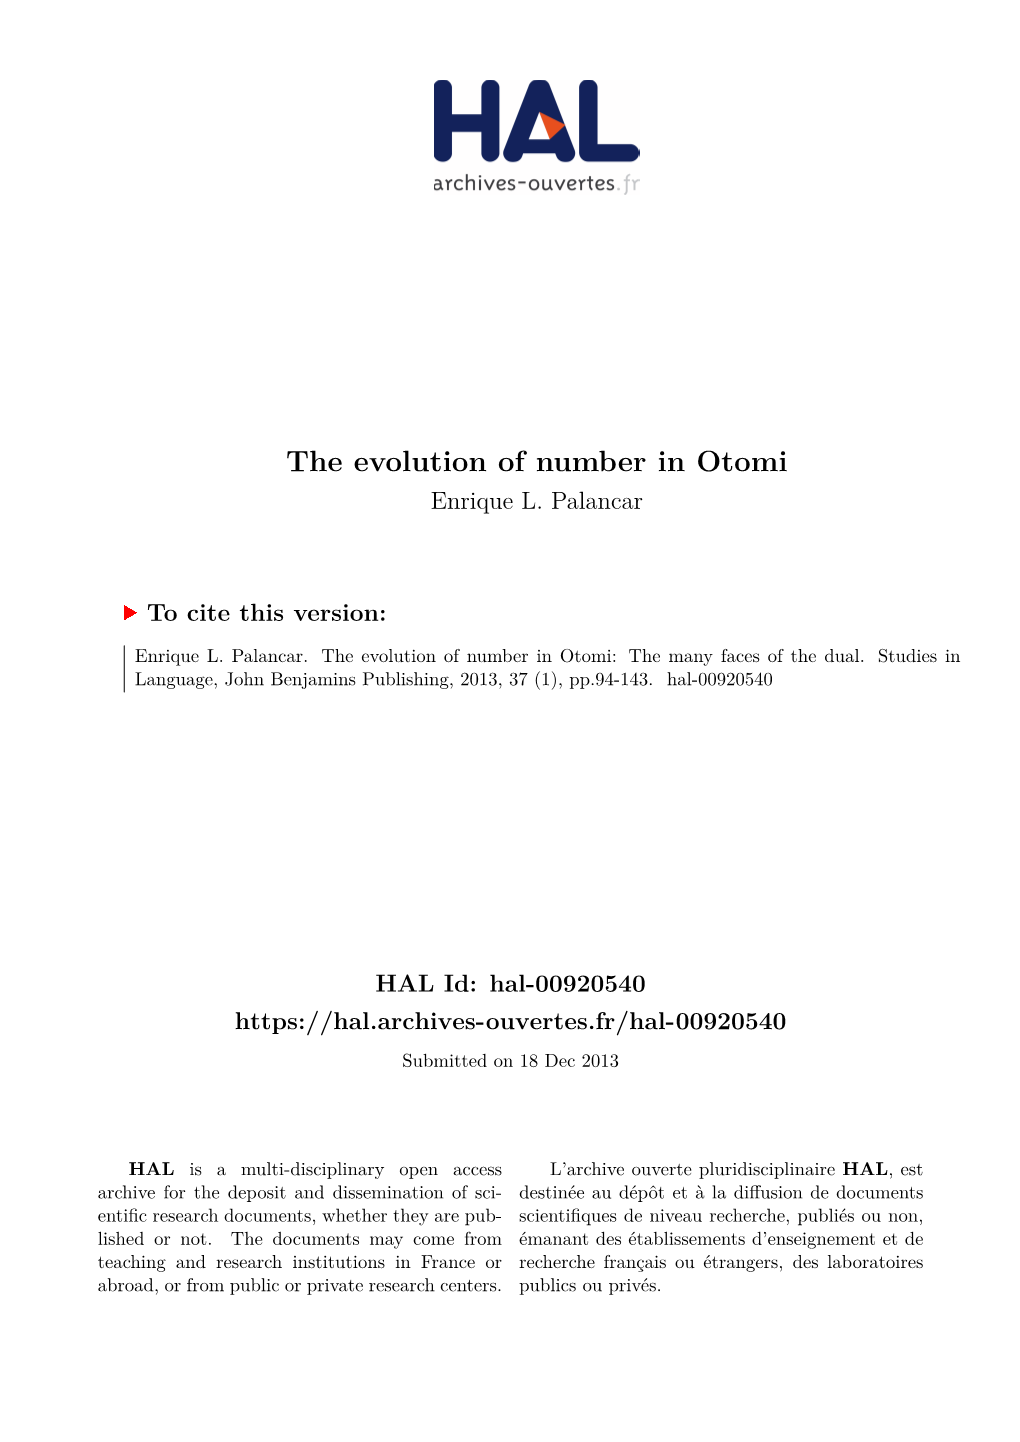 The Evolution of Number in Otomi Enrique L